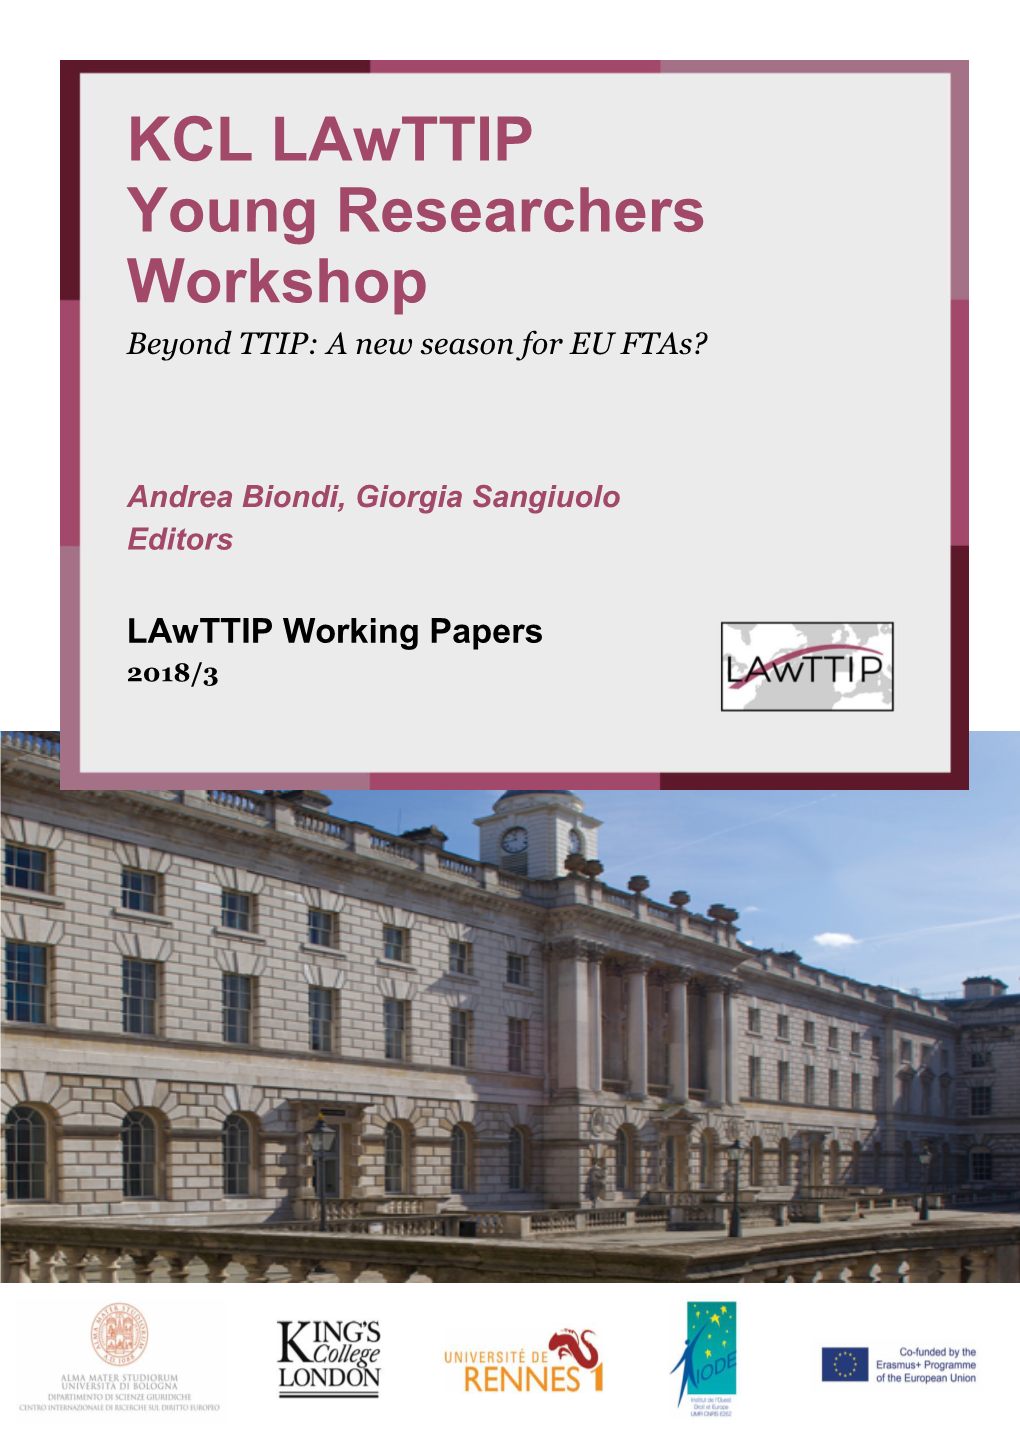 KCL Lawttip Young Researchers Workshop Beyond TTIP: a New Season for EU Ftas?